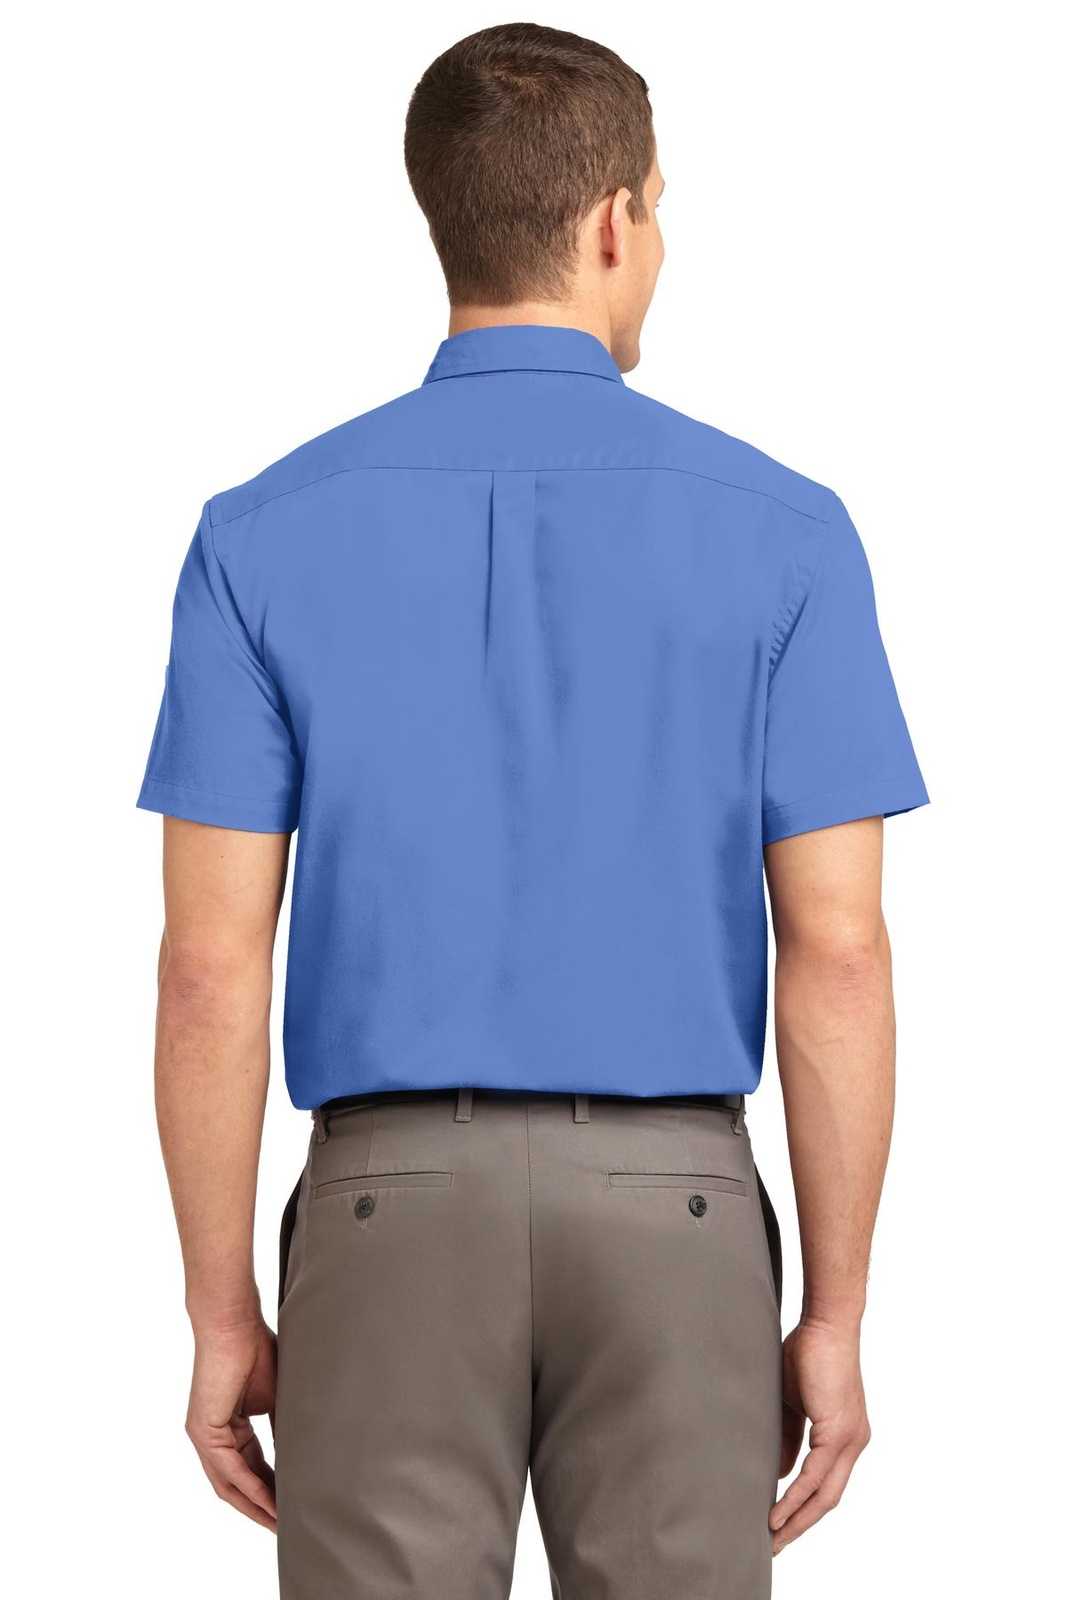 Port Authority S508 Short Sleeve Easy Care Shirt - Ultramarine Blue - HIT a Double - 2